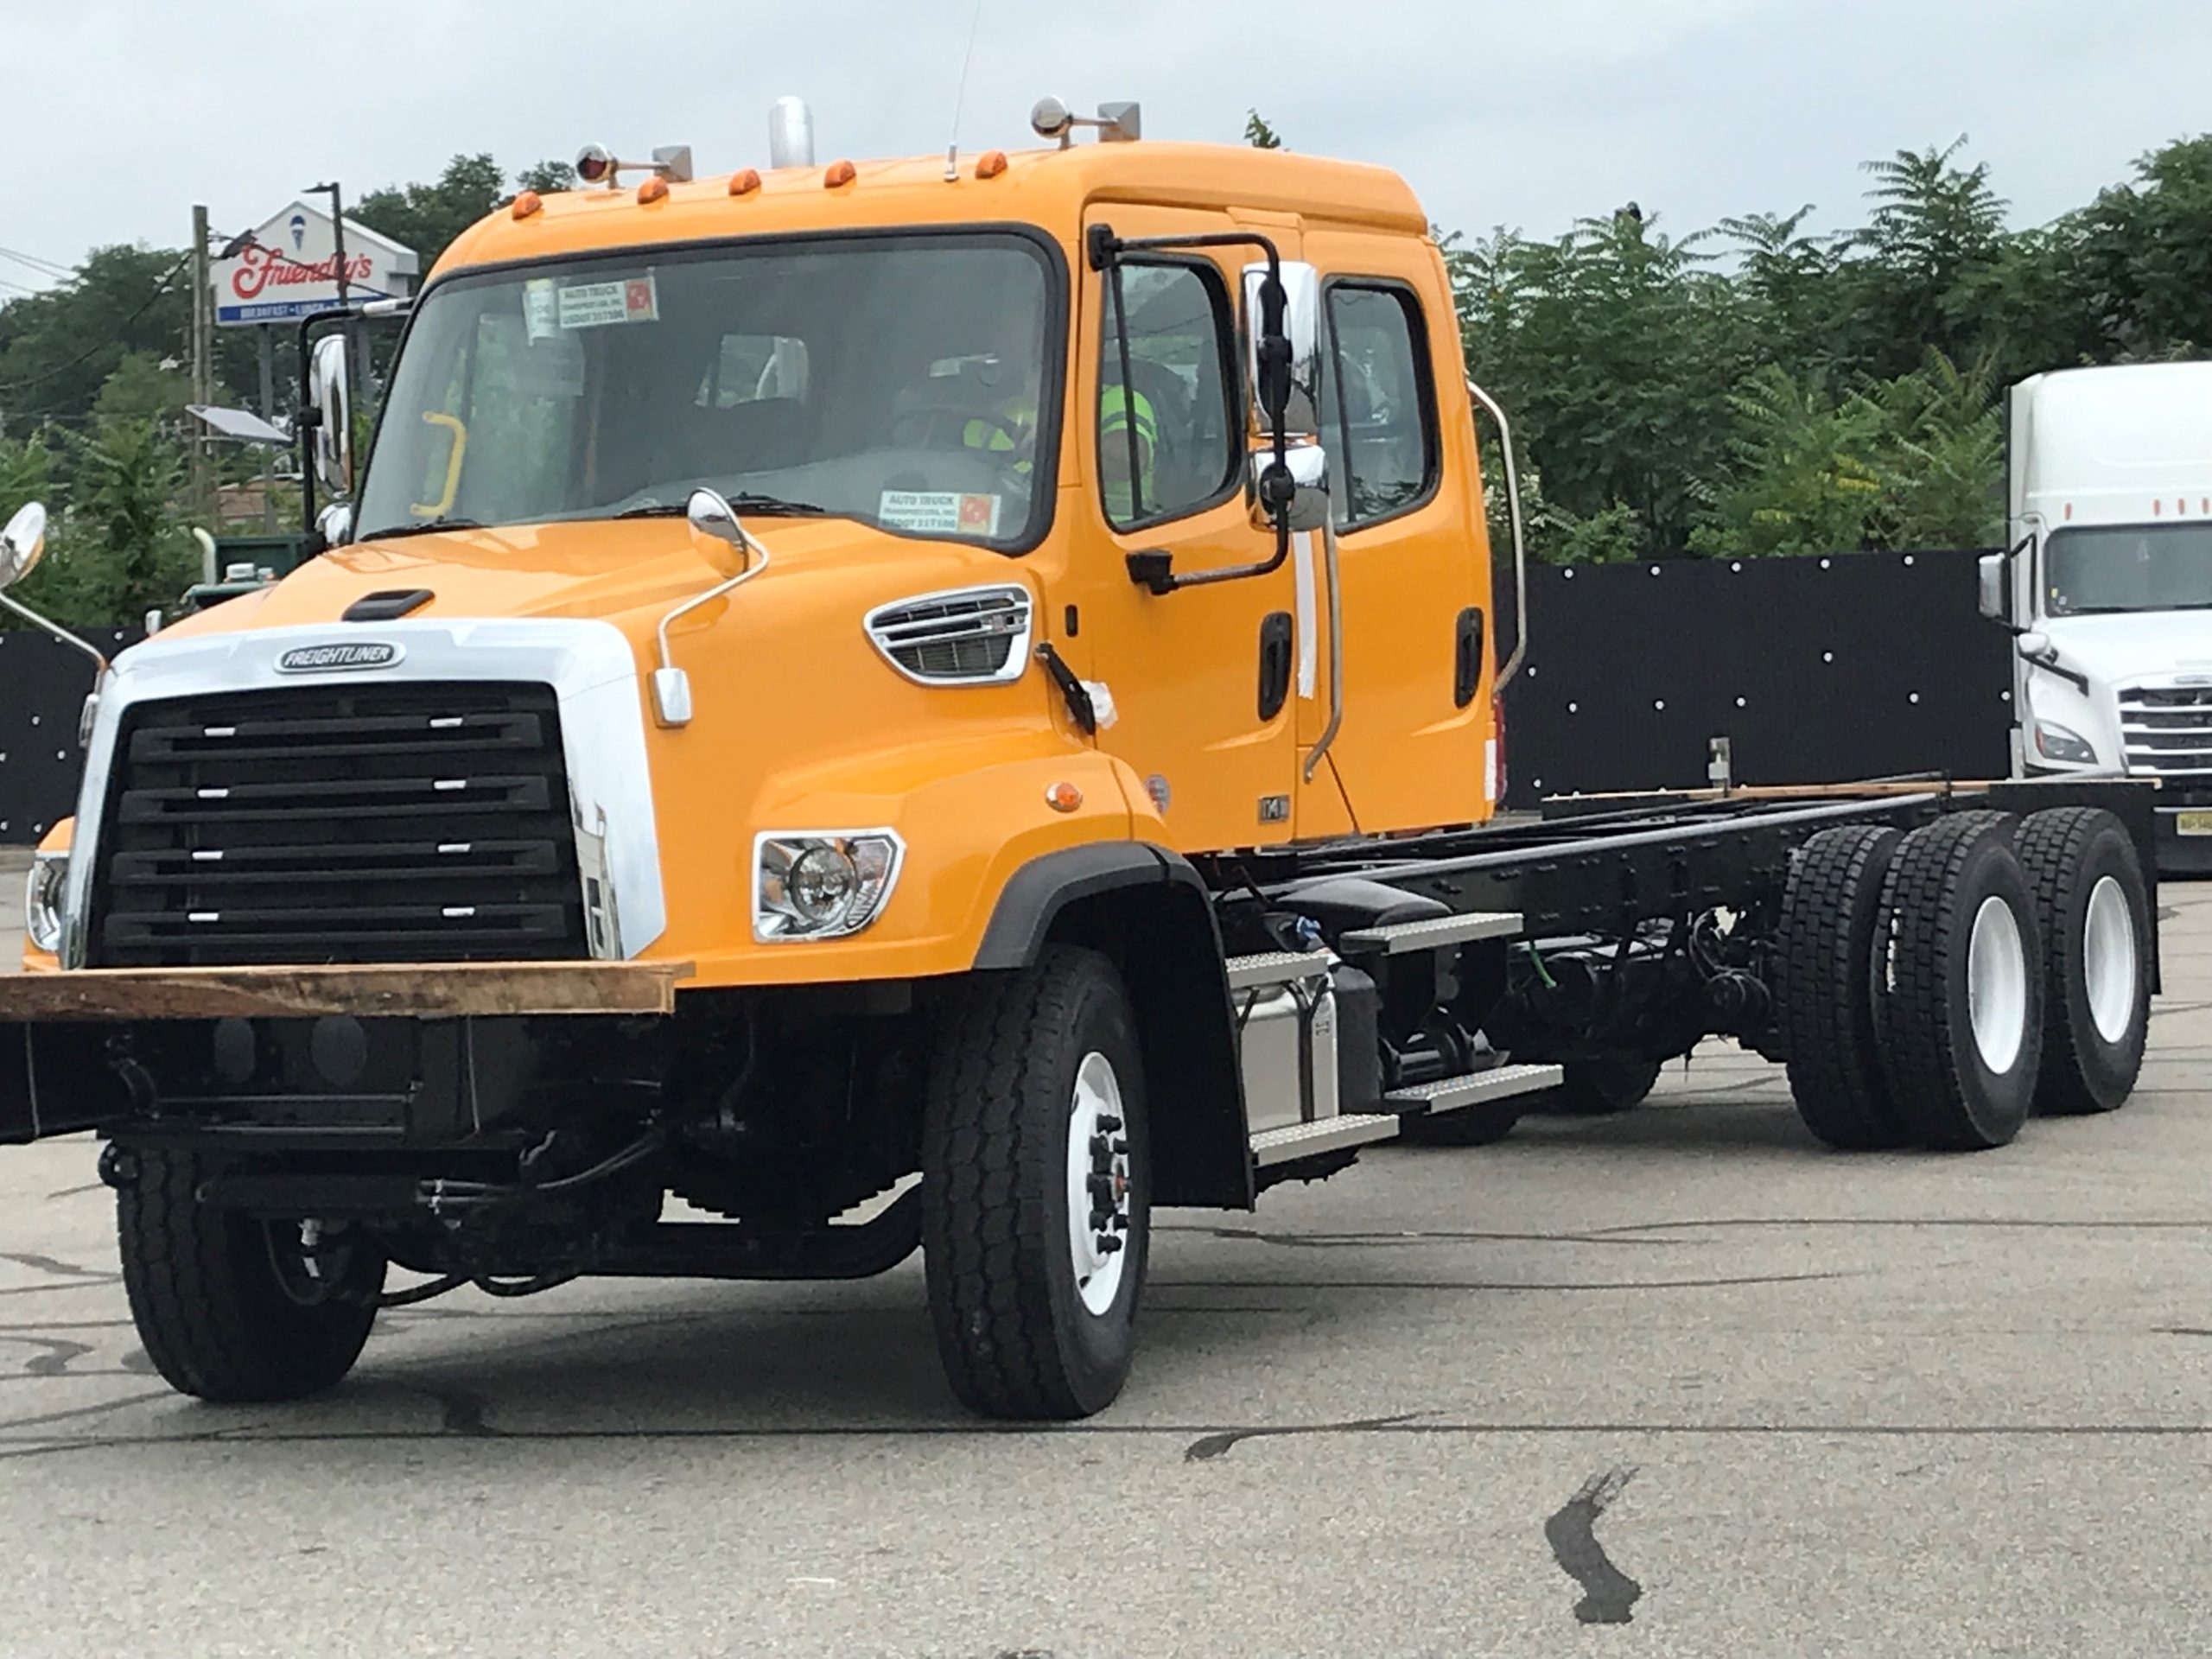 114 SD Crew Cab – Municipal Trucks